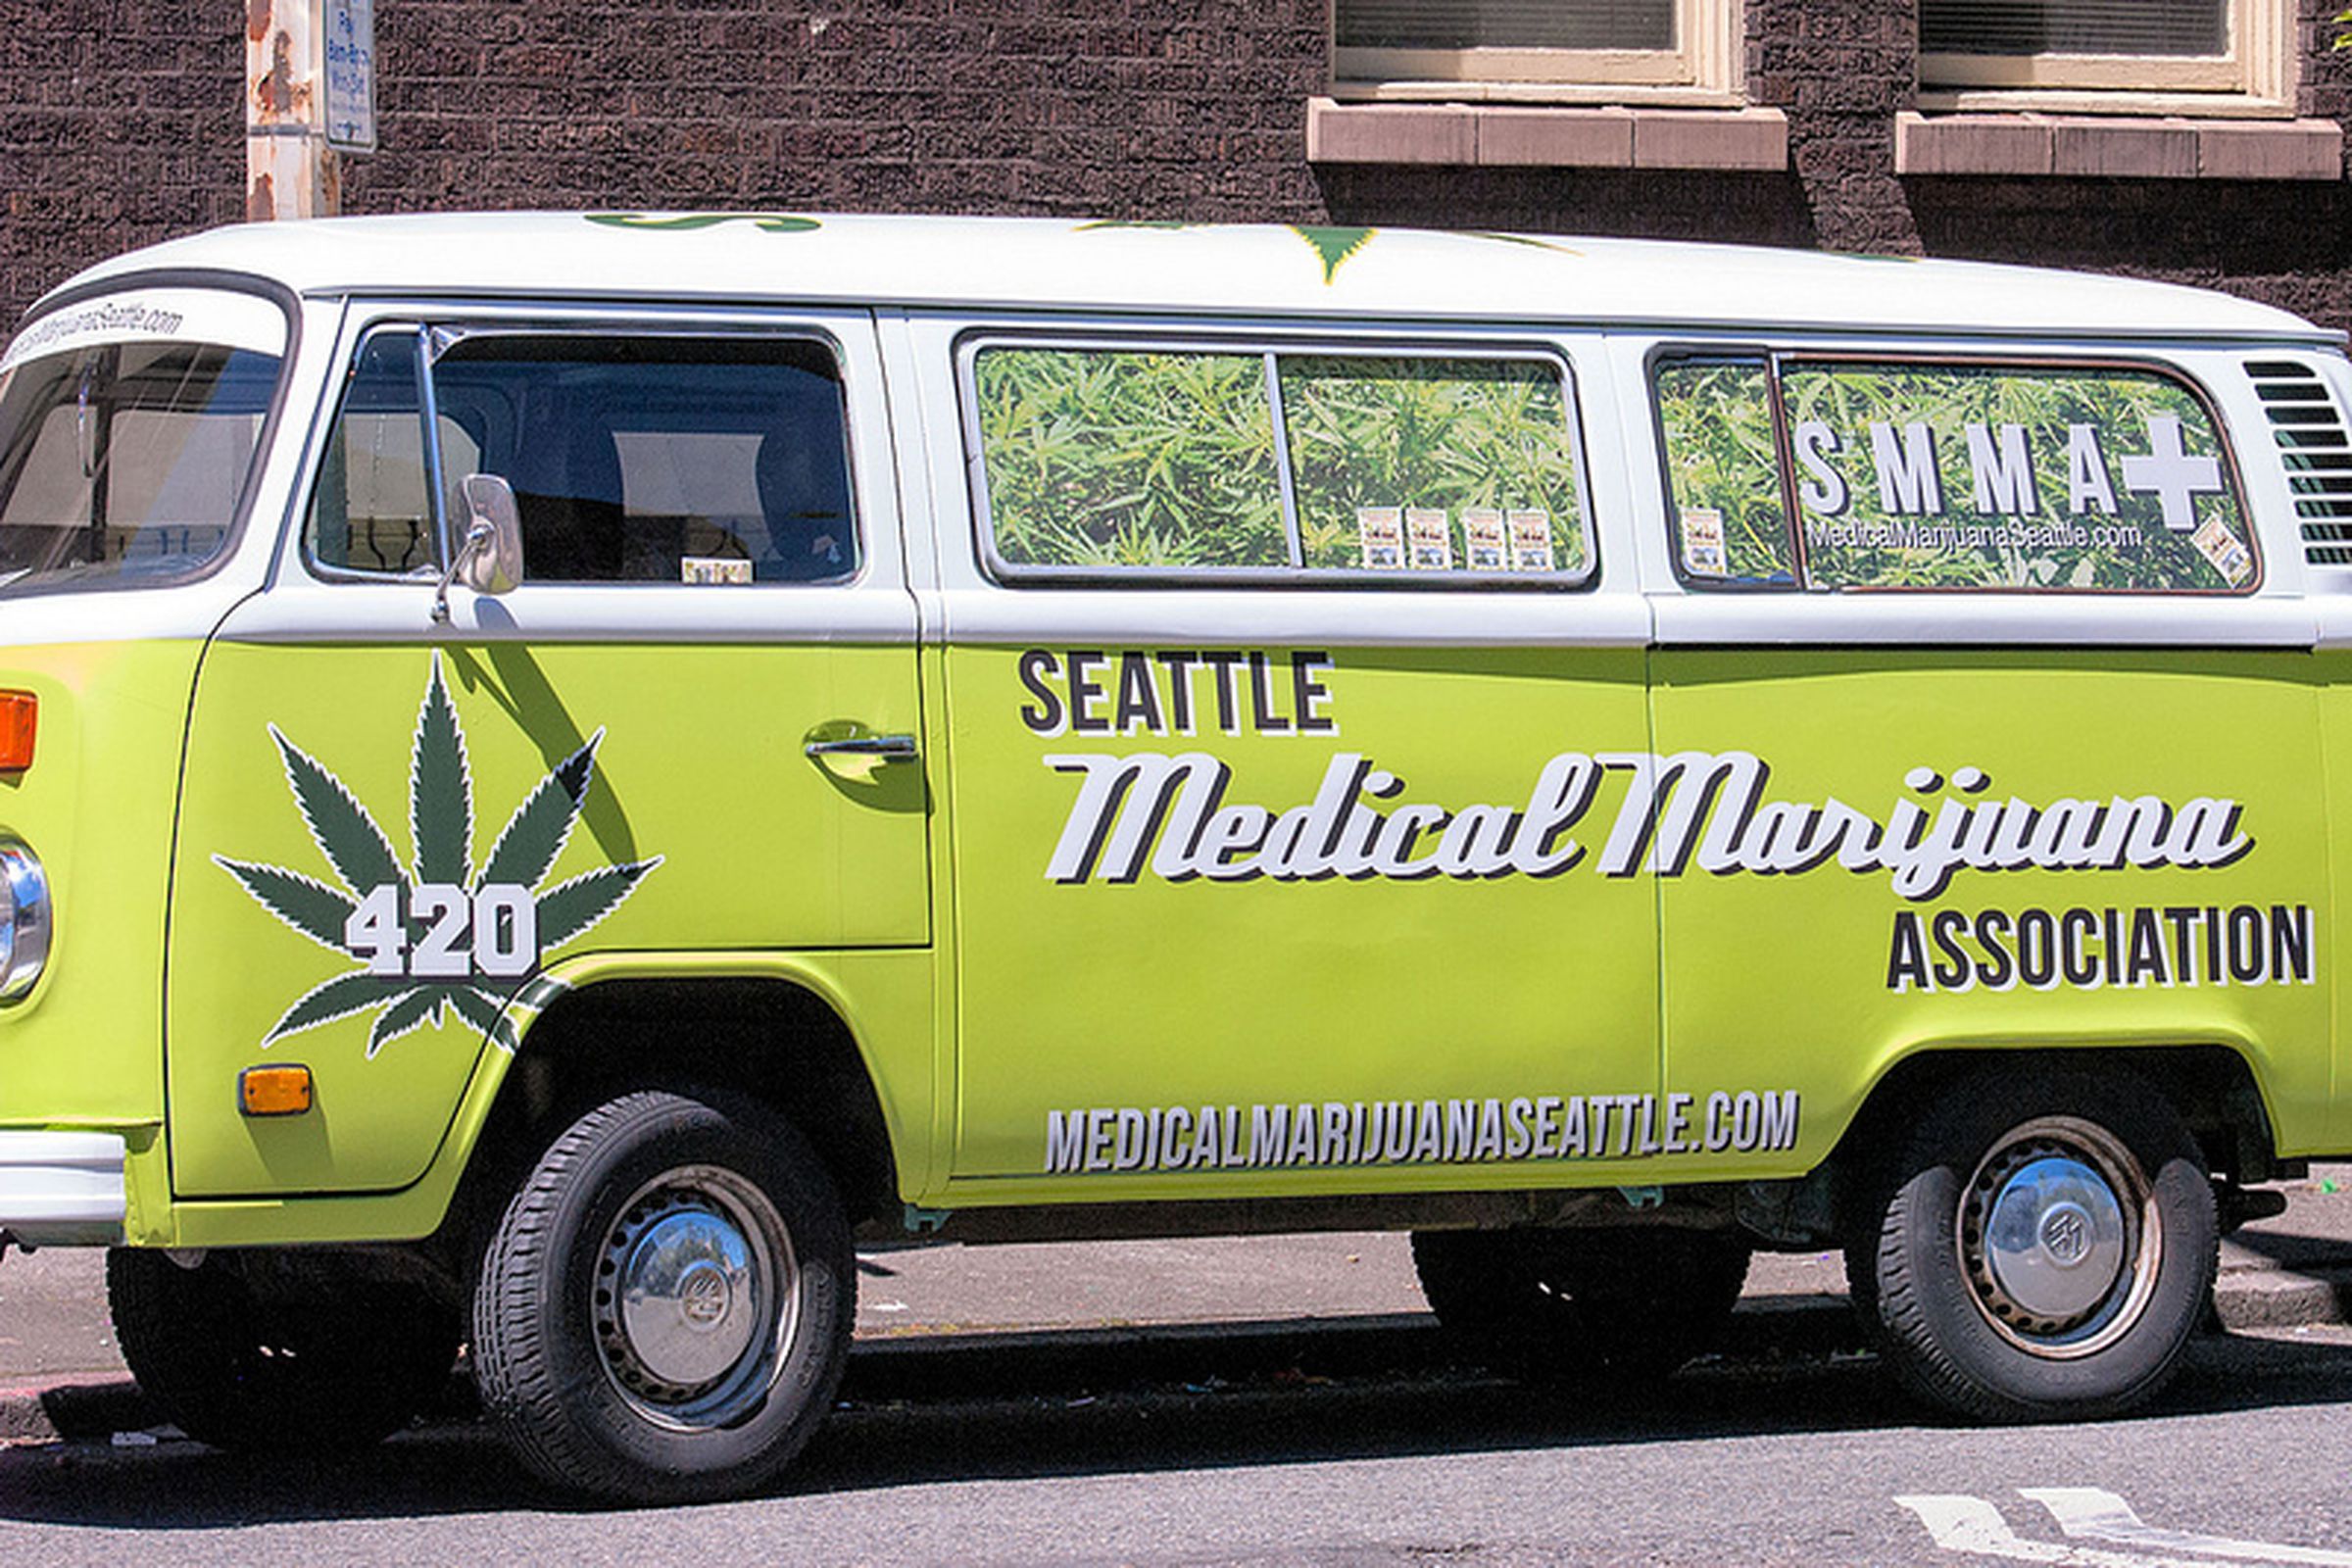 Seattle's Medical Marijuana association is hurting